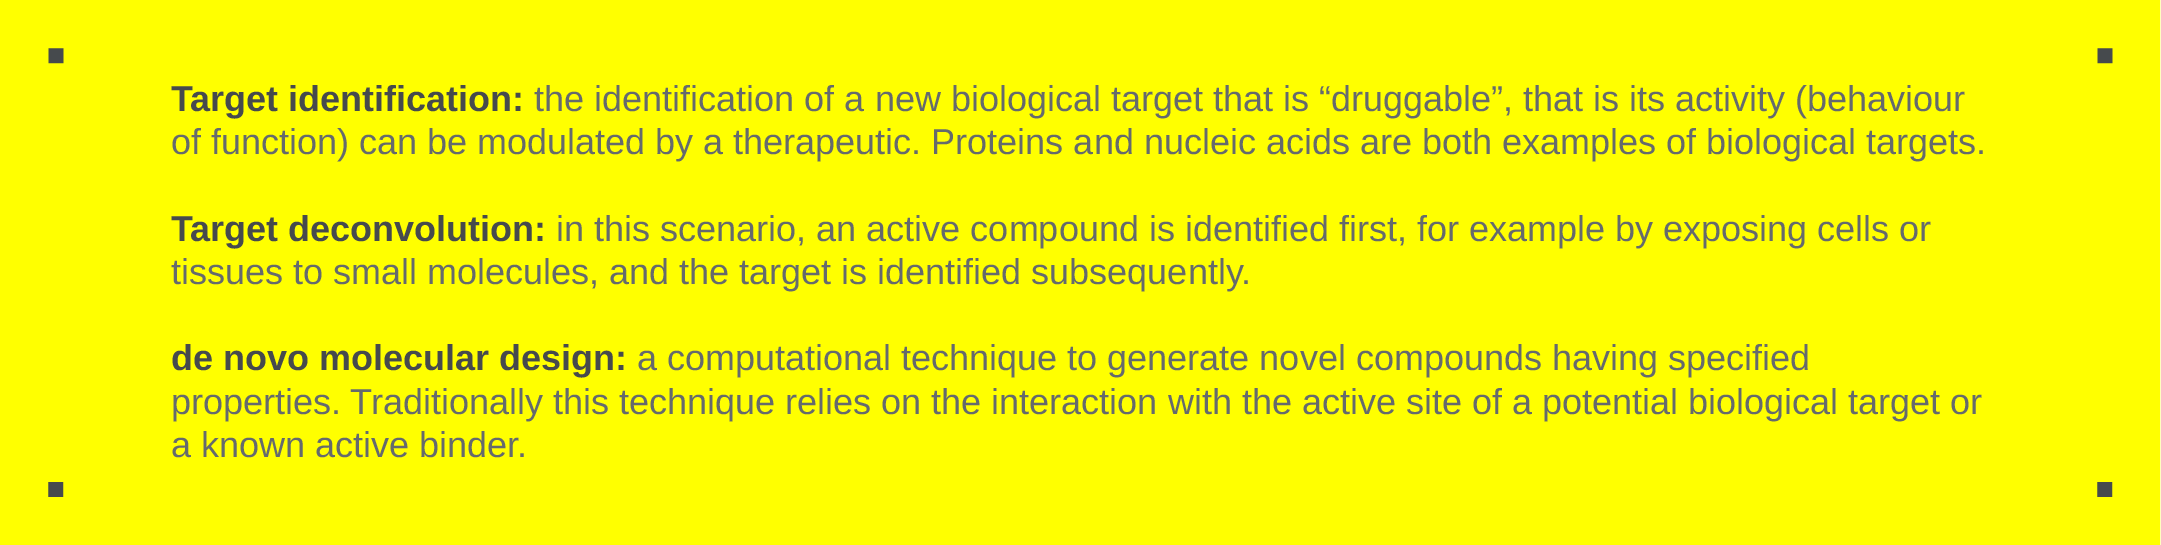 Target identification, target deconvolution and de novo molecular design definitions